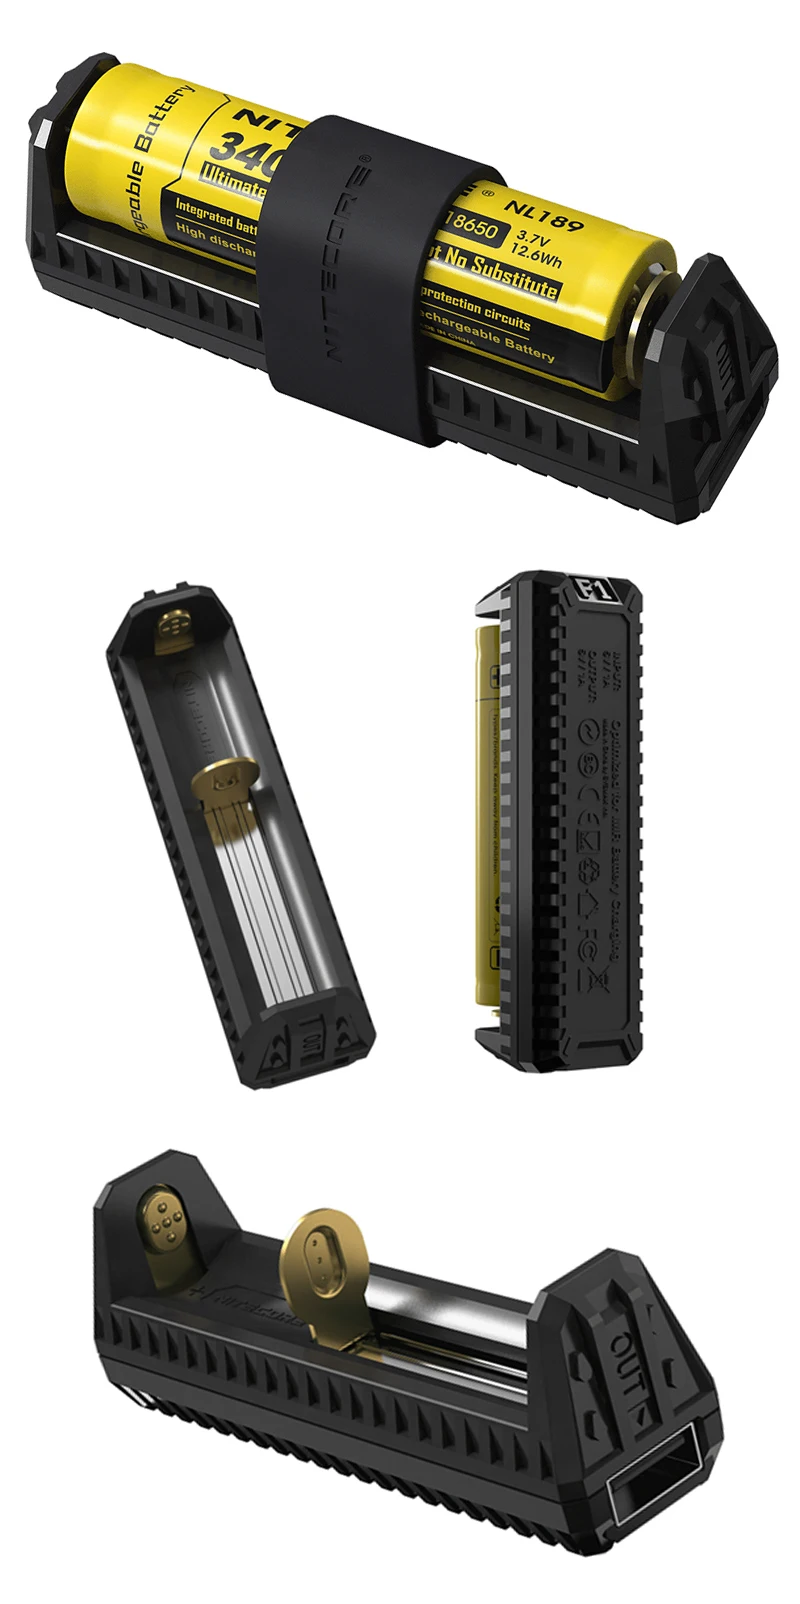 NITECORE F1 F2 гибкий внешний аккумулятор USB Интеллектуальный палец литиевая батарея зарядное устройство для 18650 10440 14500